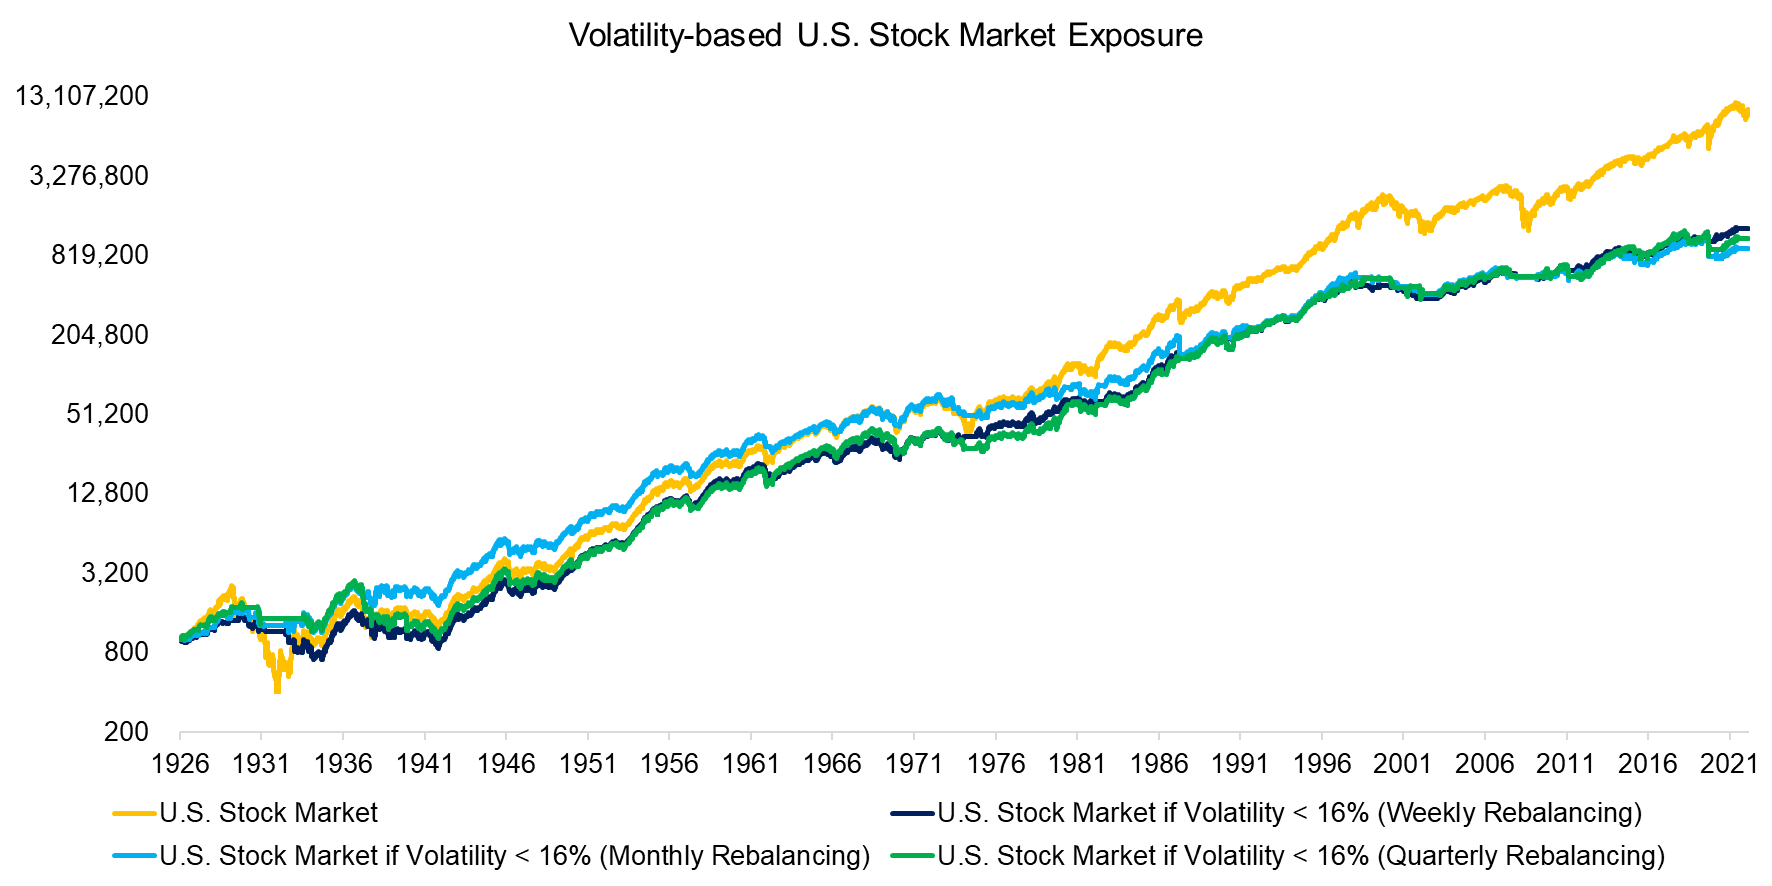 Volatility-based U.S. Stock Market Exposure